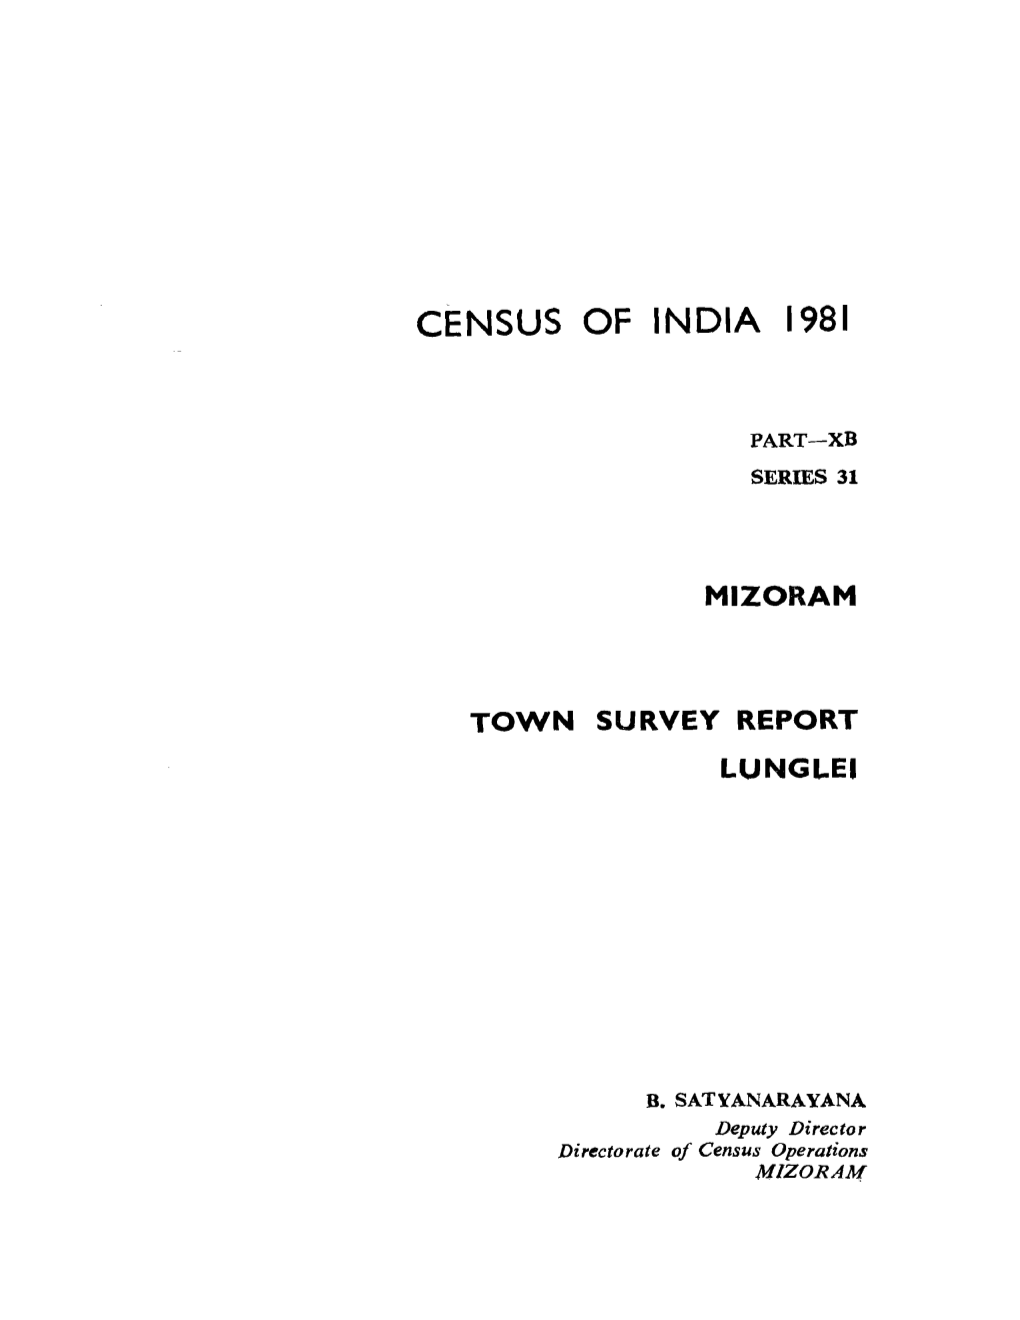 Town Survey Report Lunglei, Part XB, Series-31, Mizoram